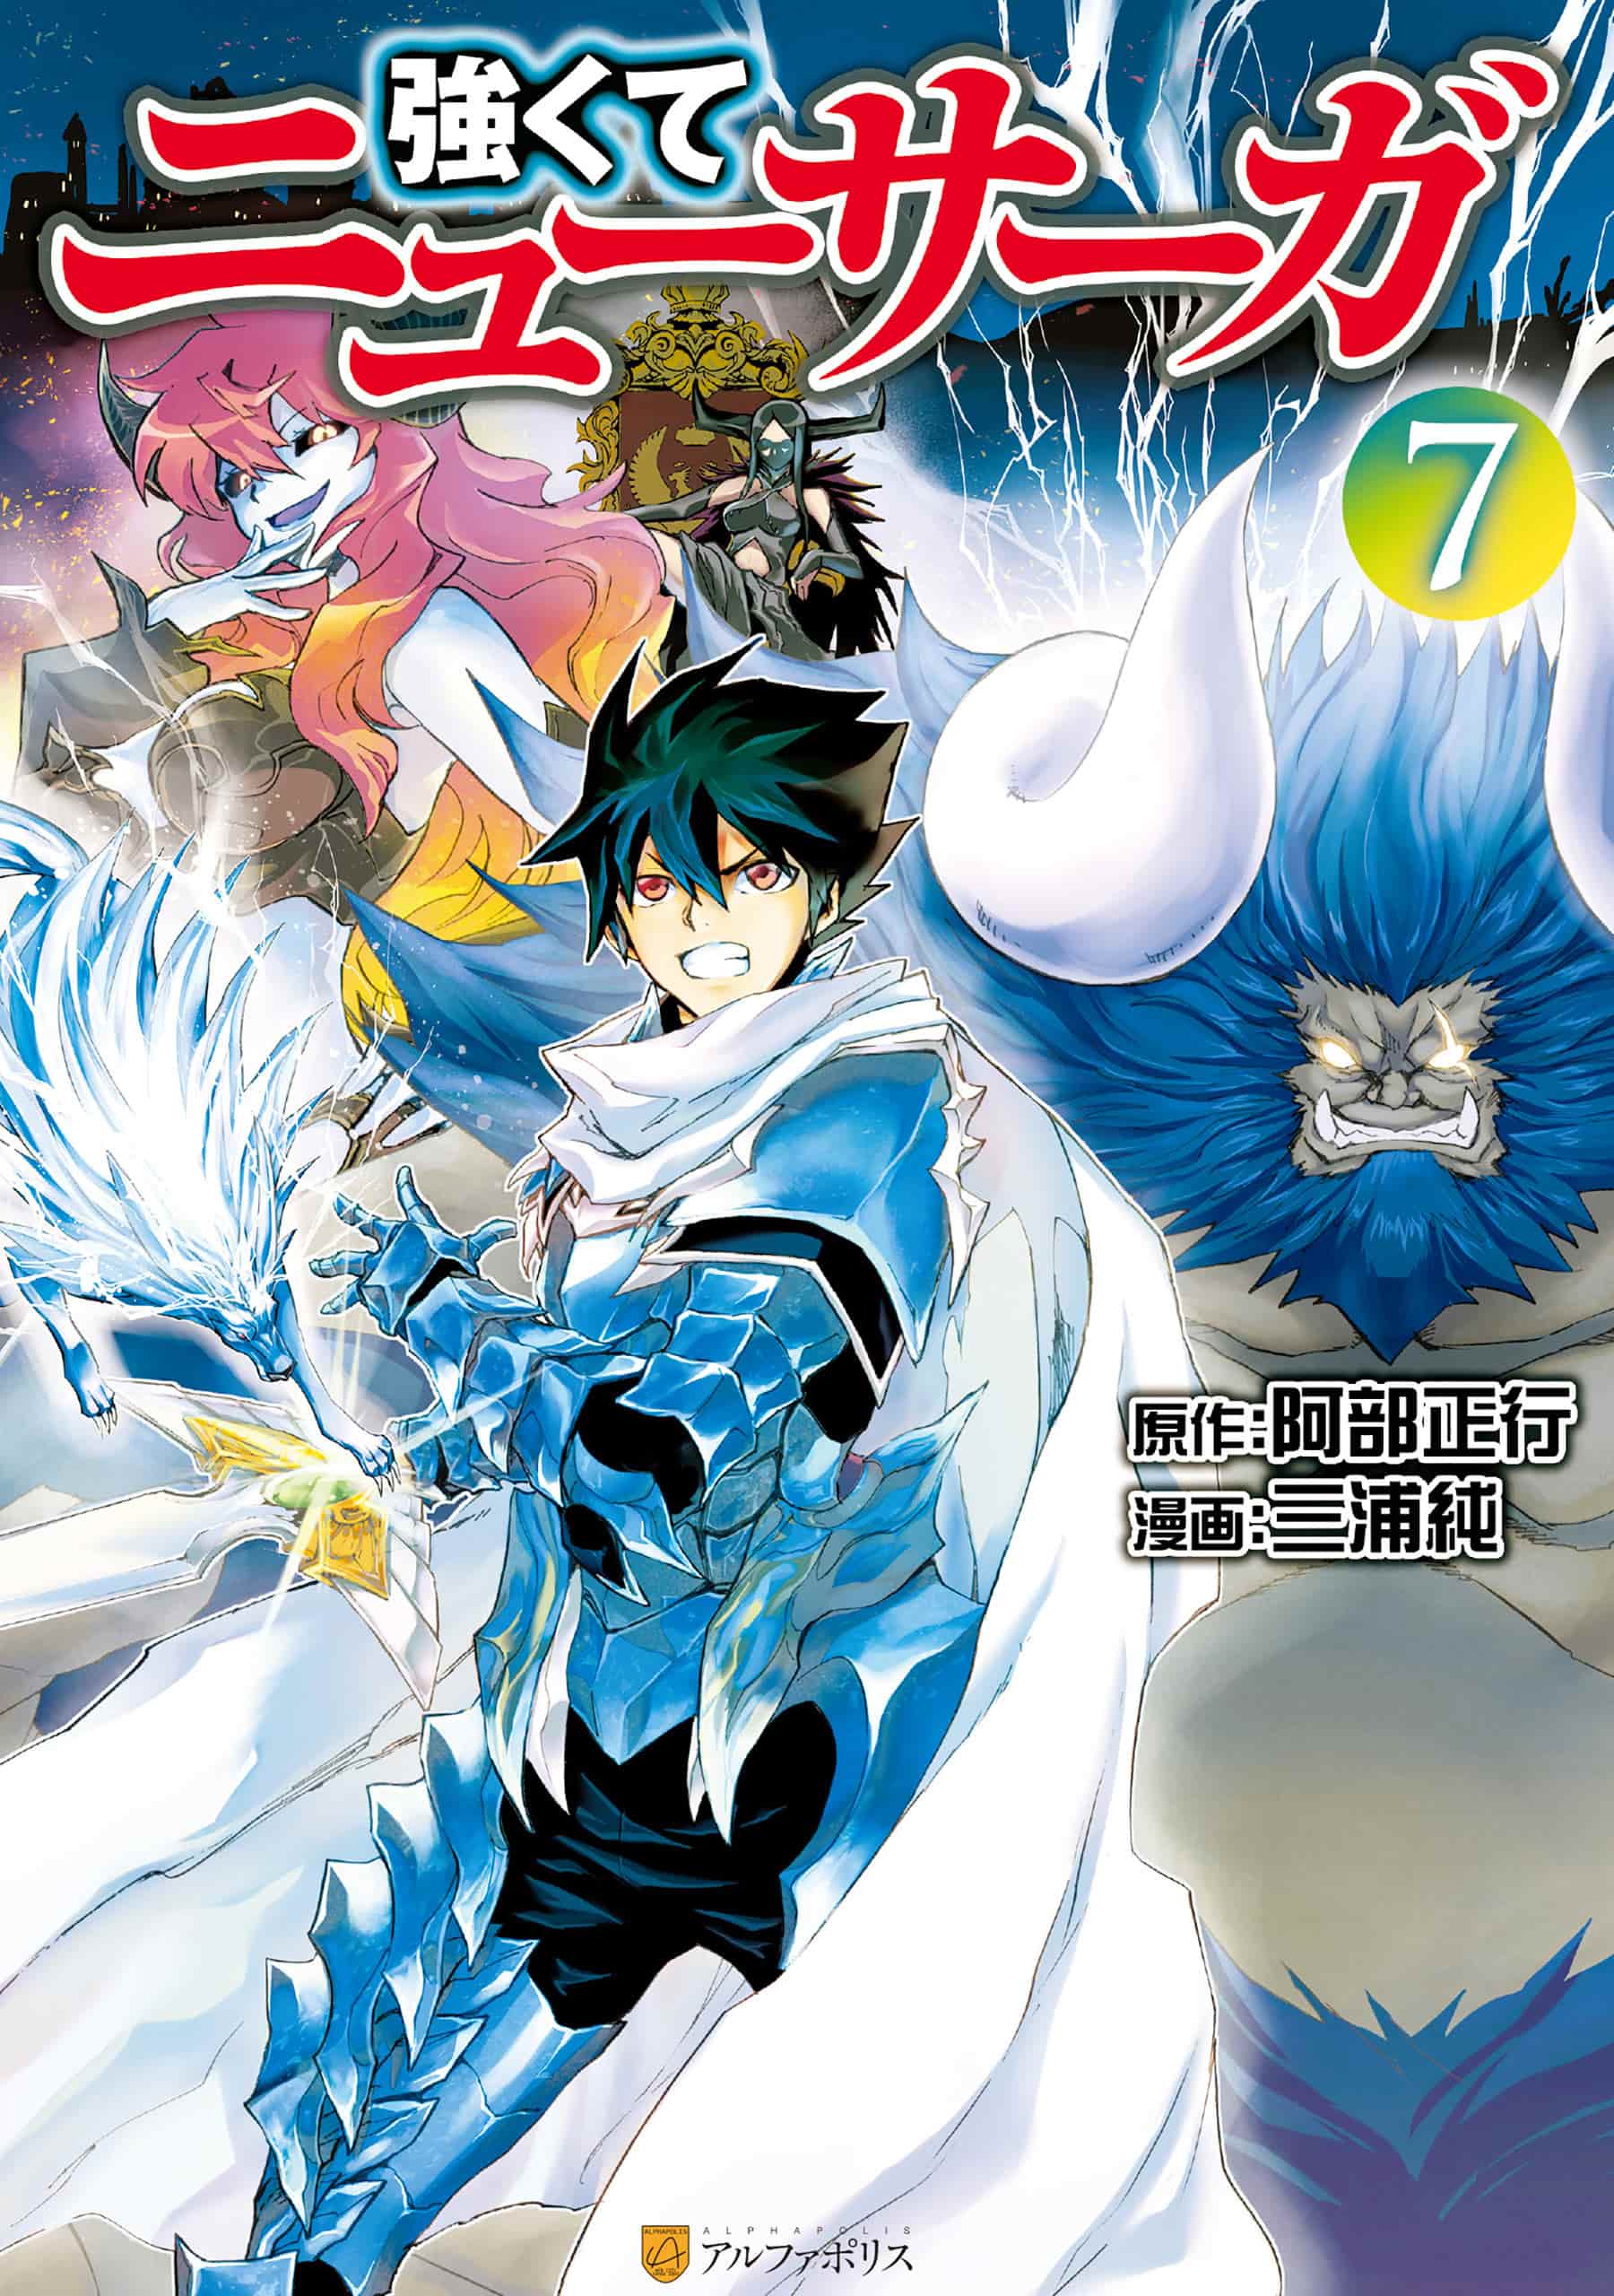 Descargar Tsuyokute New Saga Manga PDF MEGA Imagen